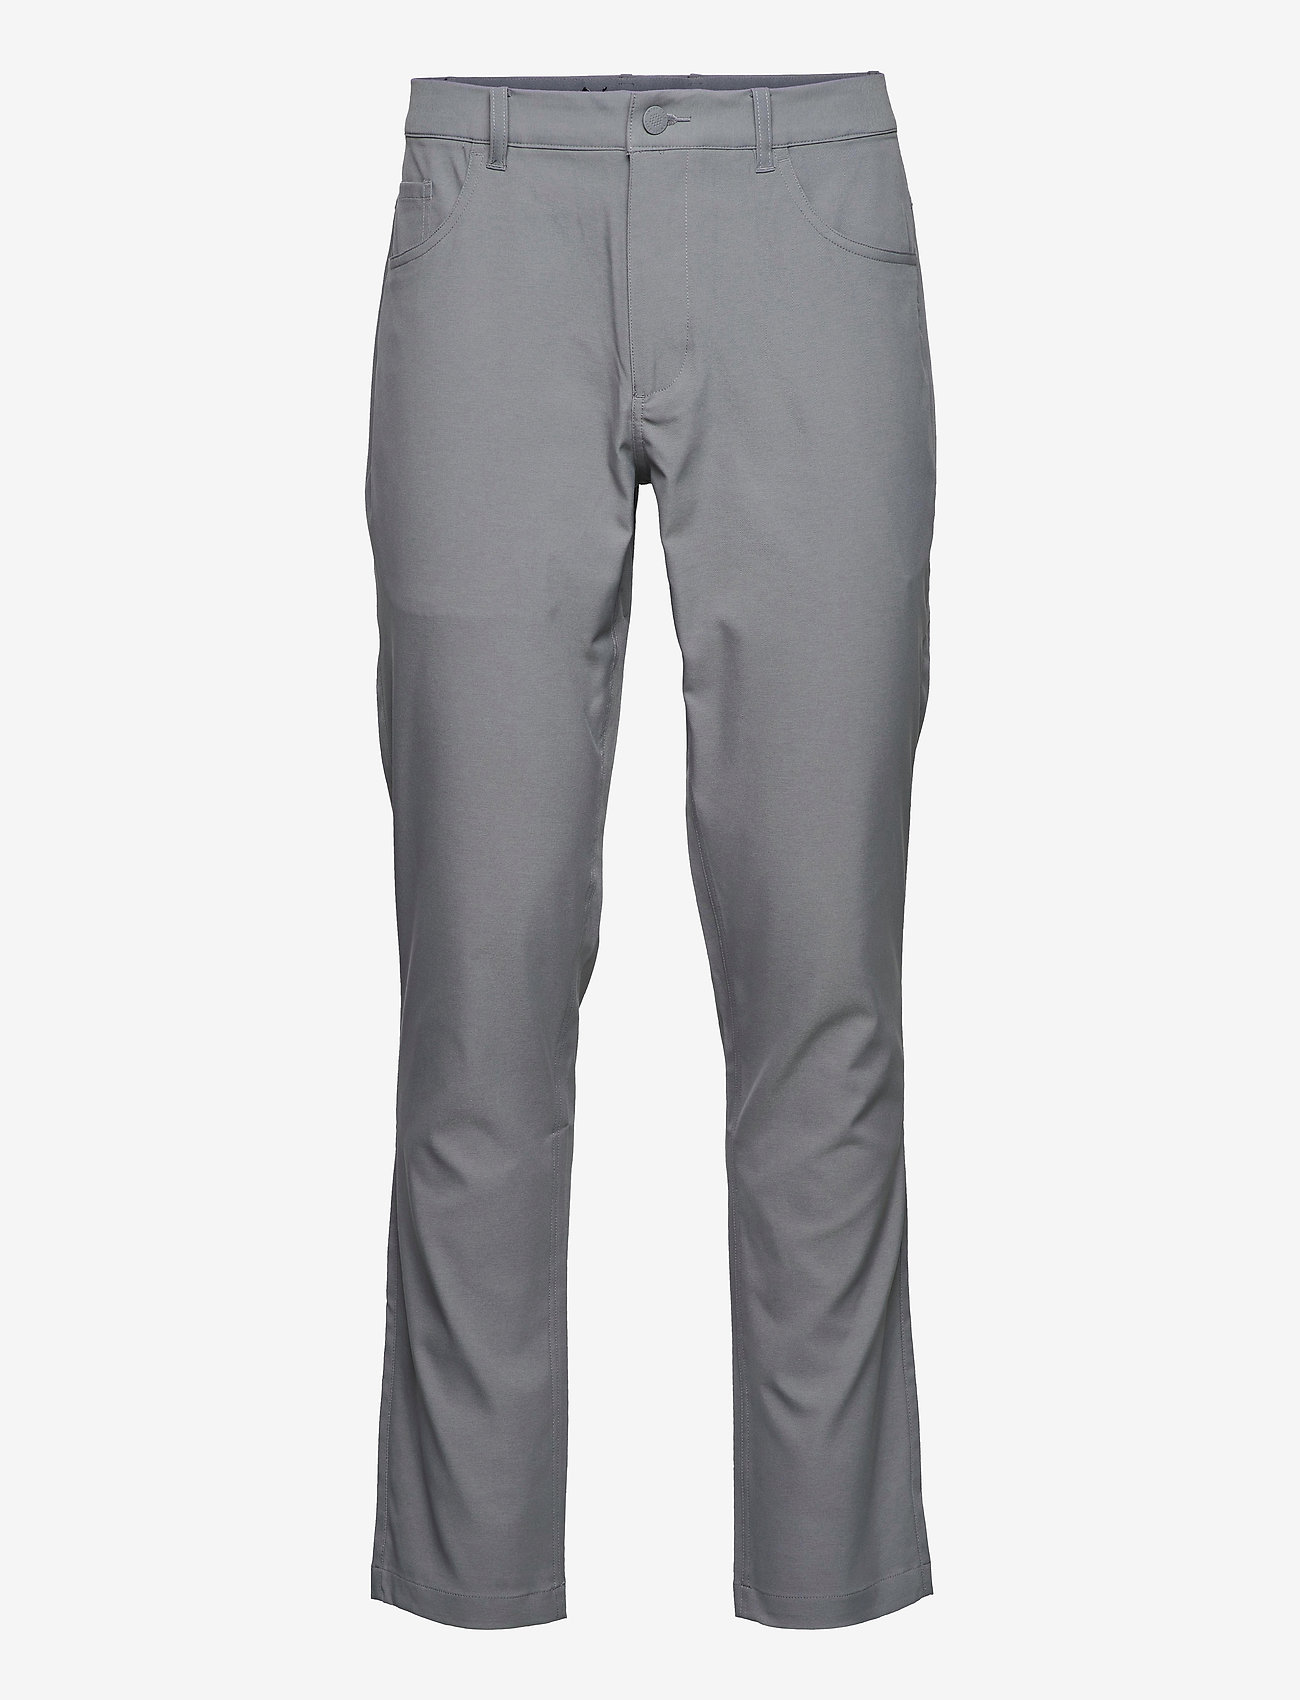 PUMA Golf - Jackpot 5 Pocket Pant - golf pants - quiet shade - 0